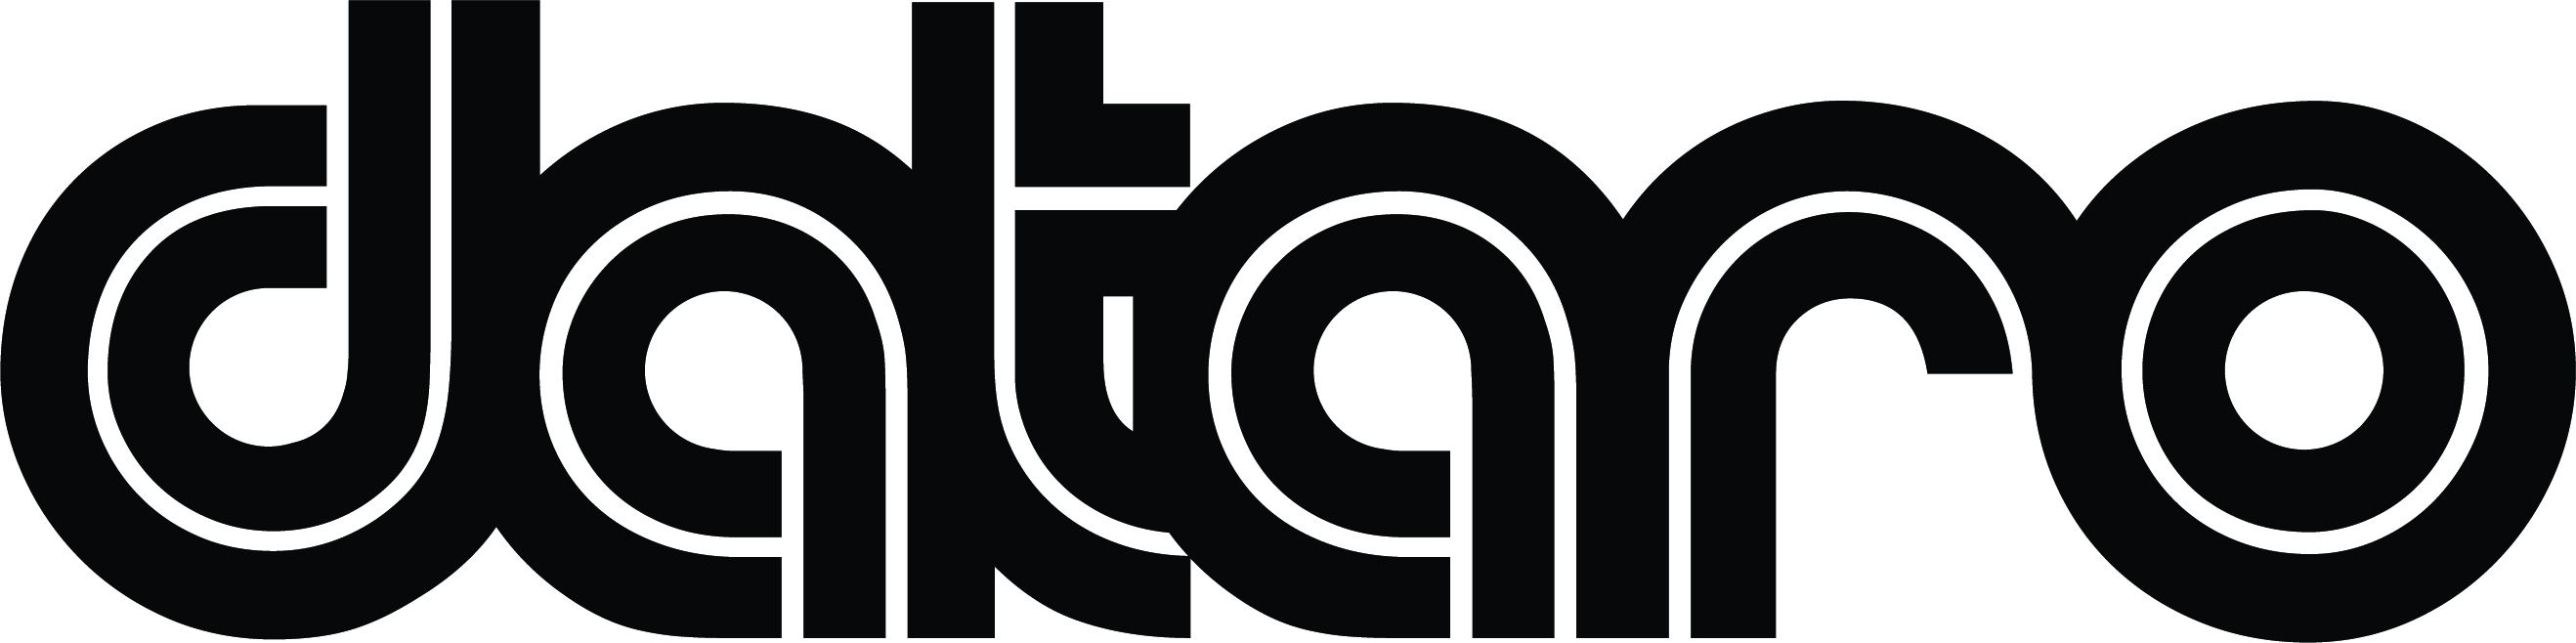 Dataro logo